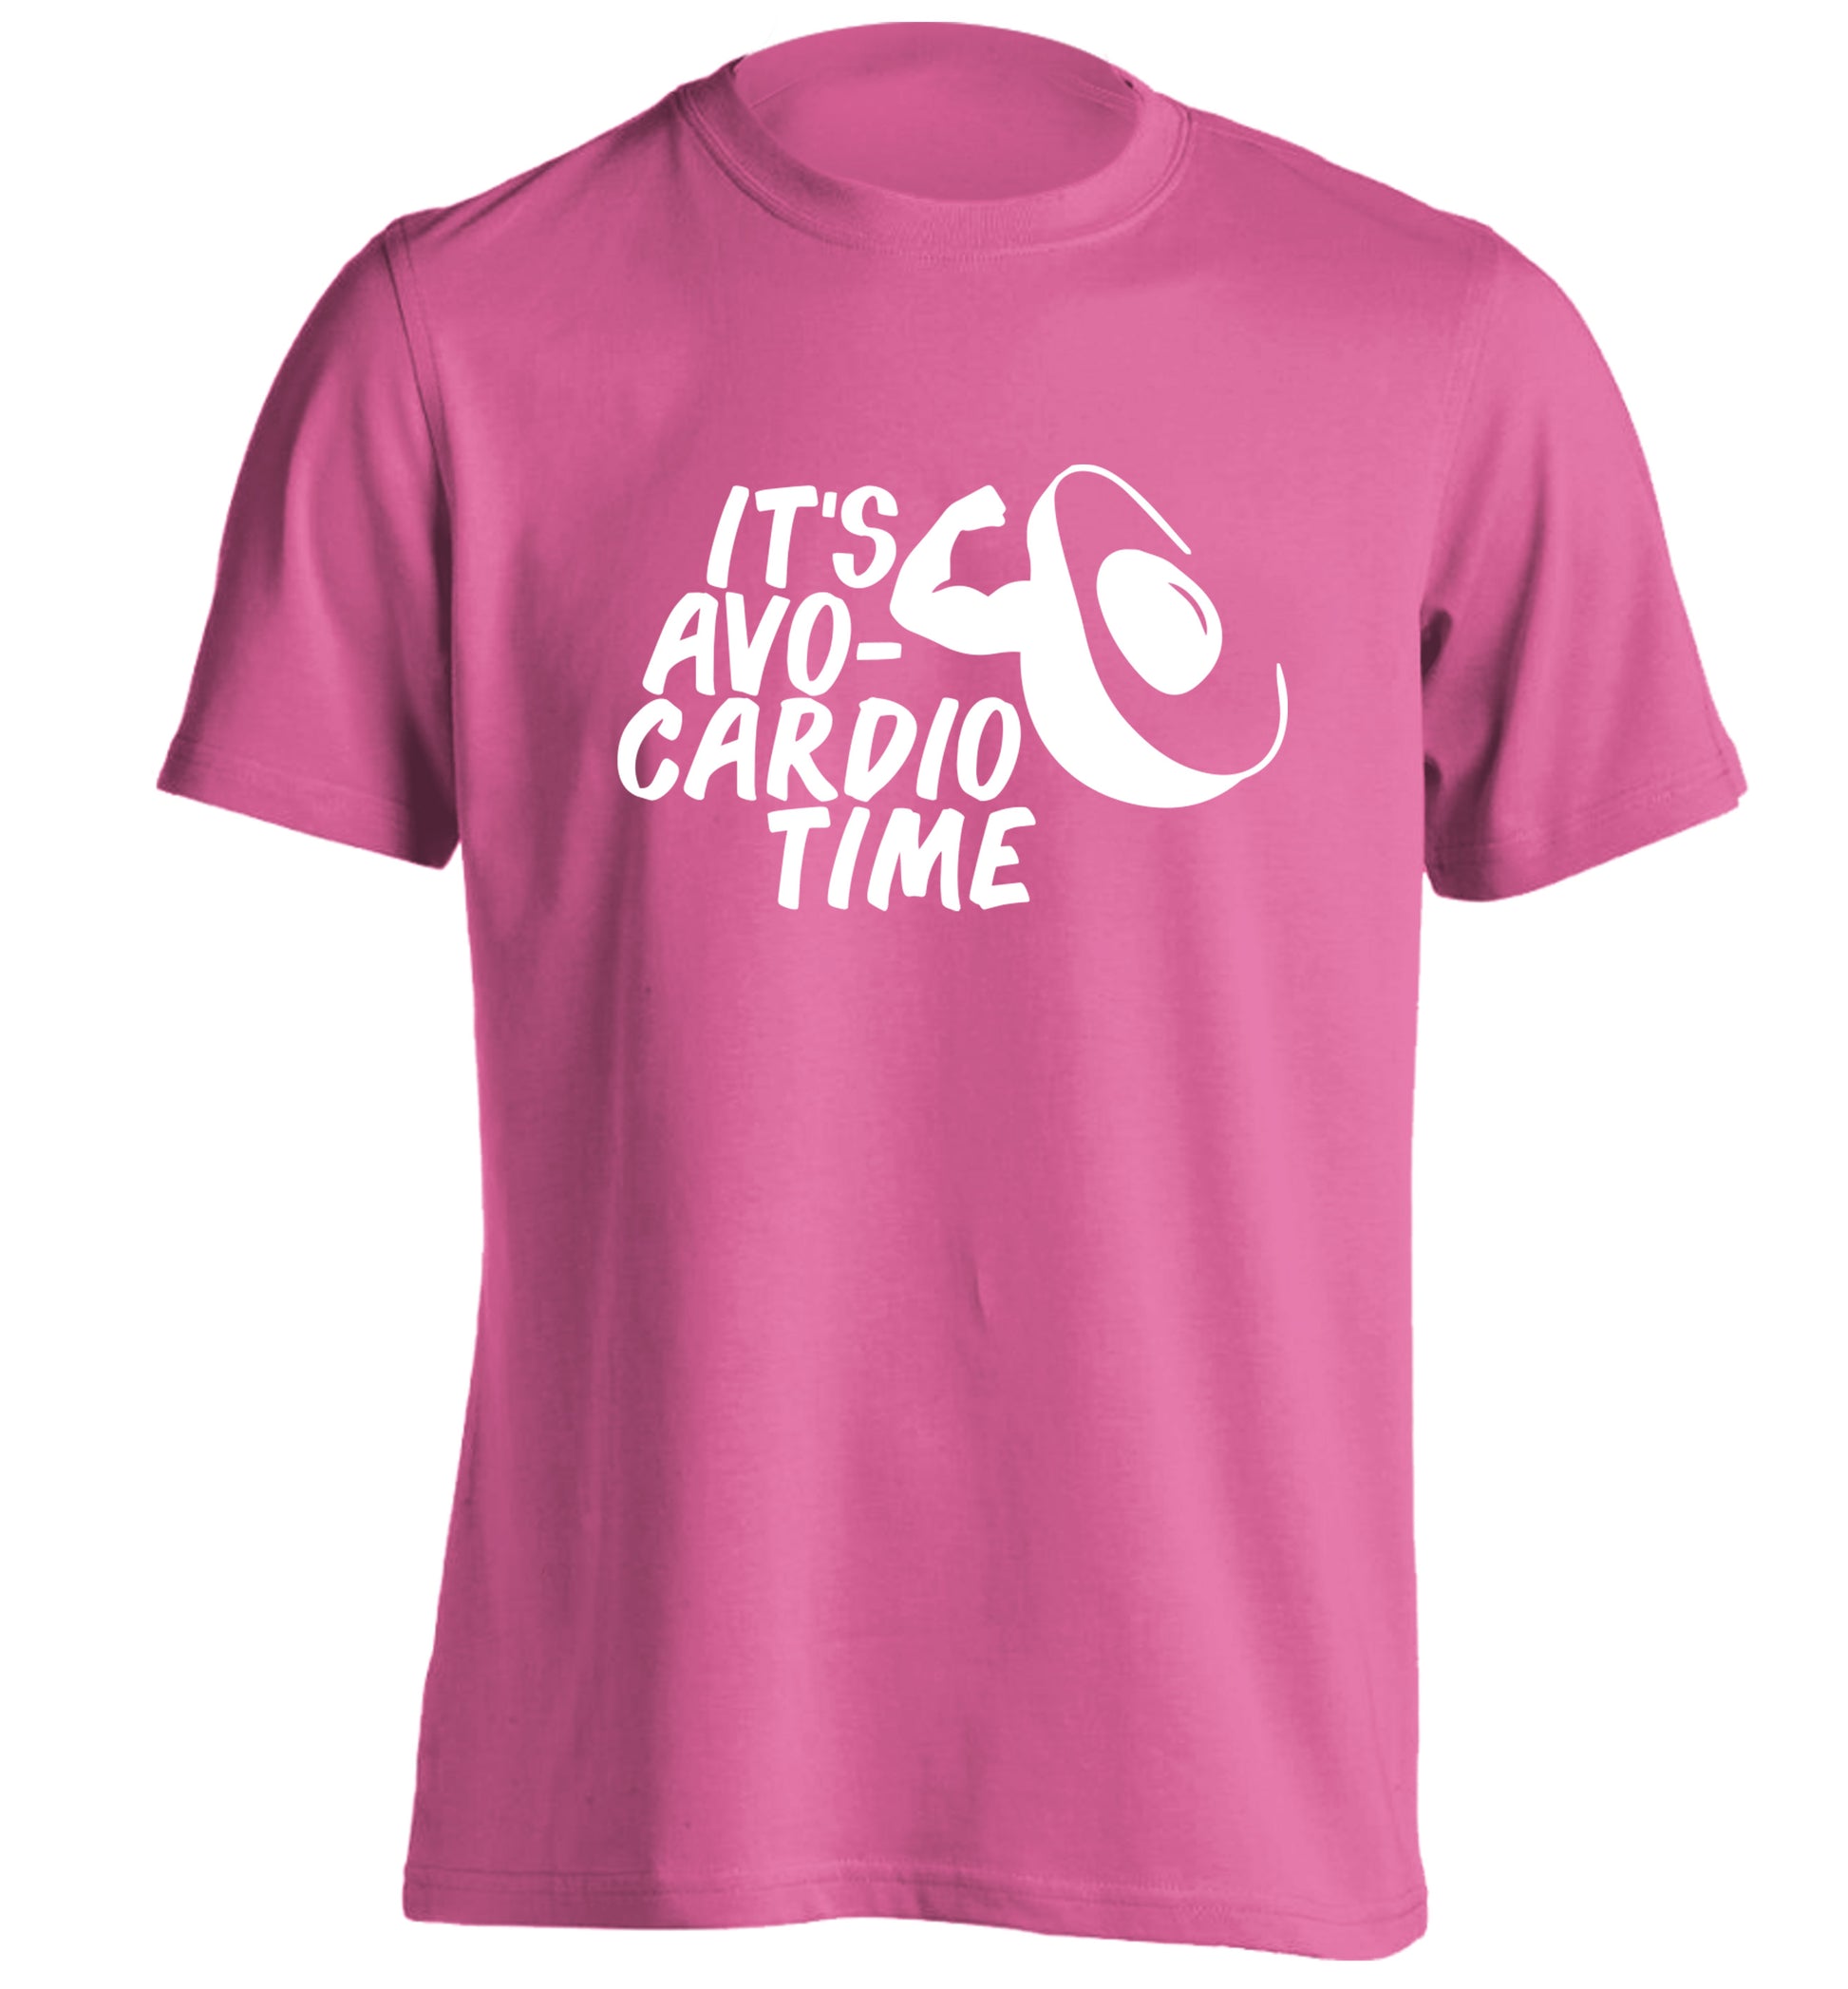 It's avo-cardio time adults unisex pink Tshirt 2XL